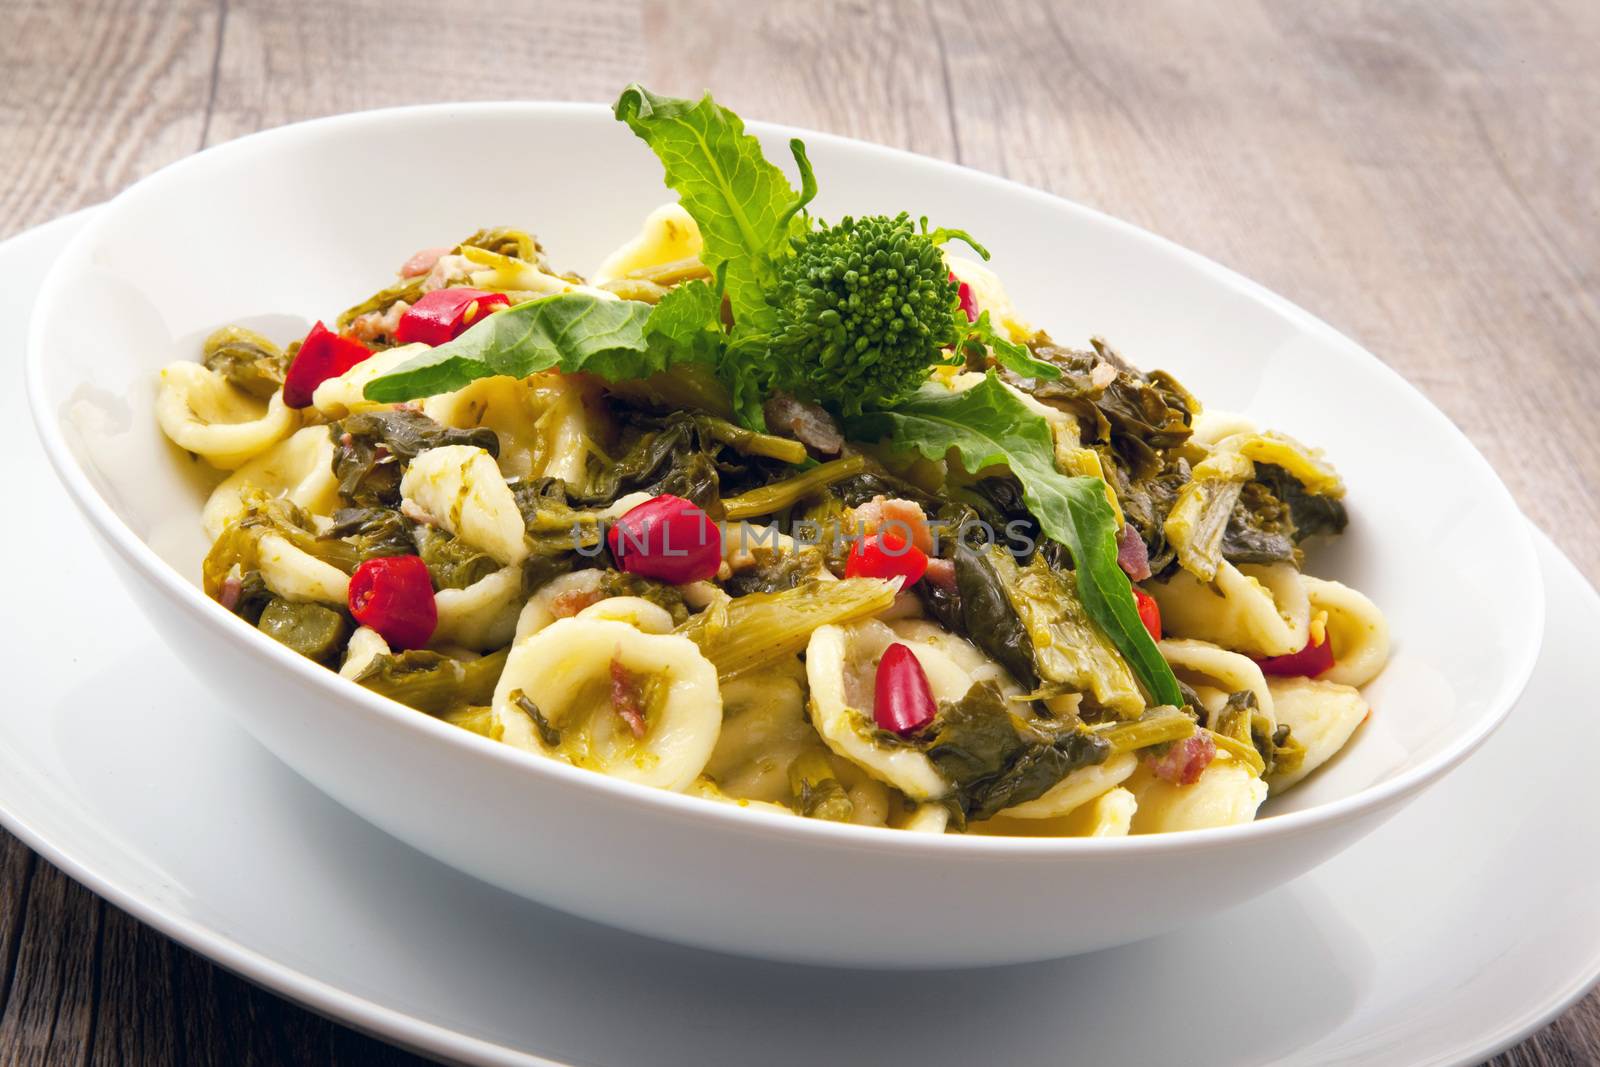 original ialian pasta with broccoli and turnips